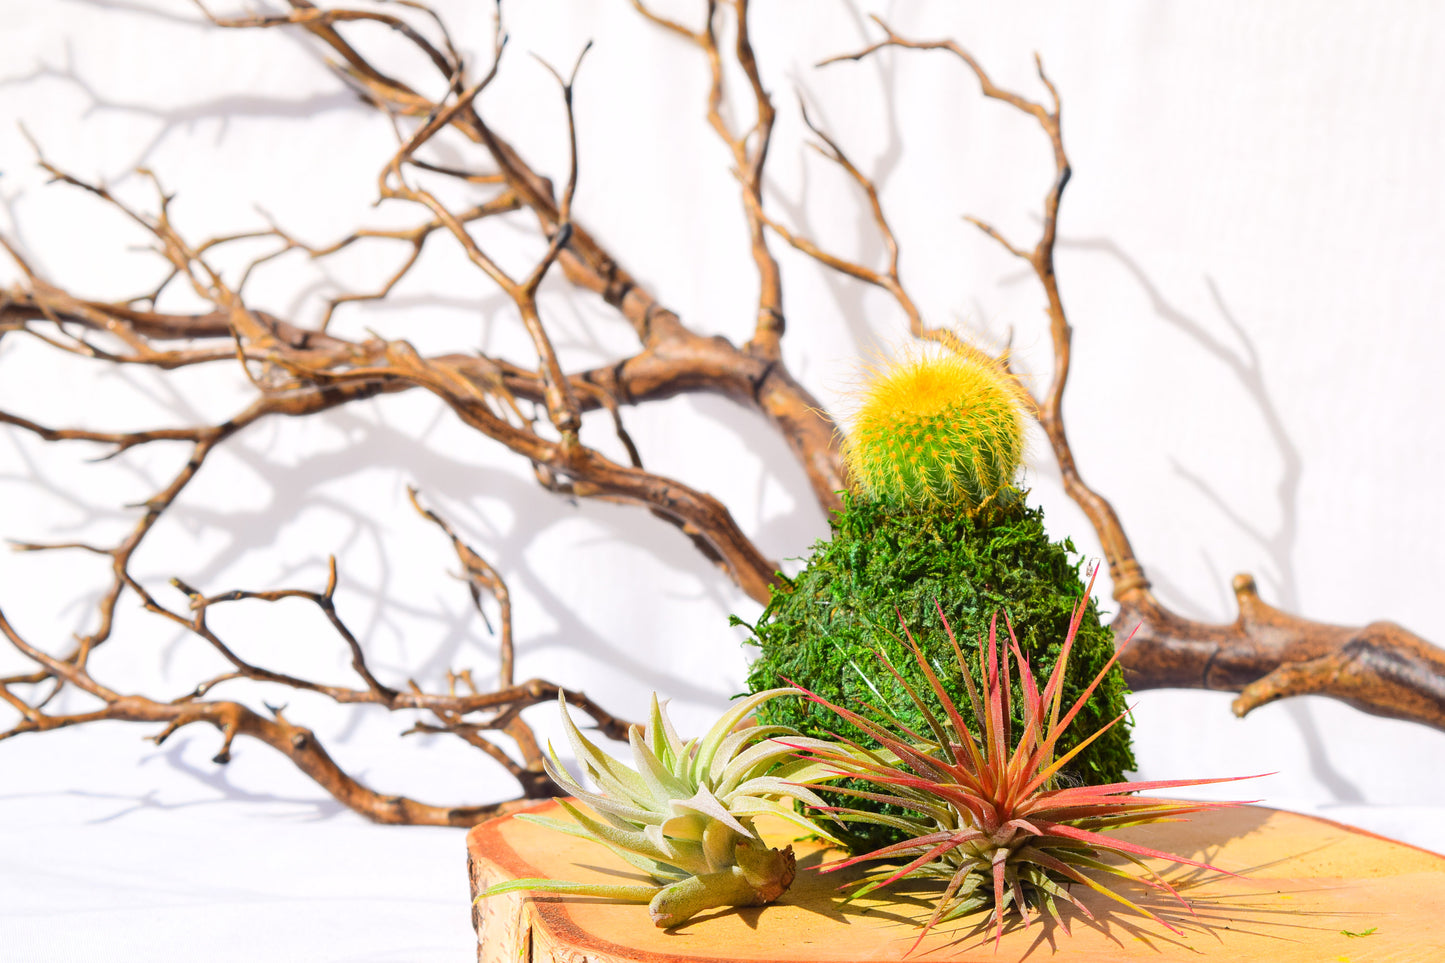 Cactus Kokedama - Japanese Living Art - Moss ball